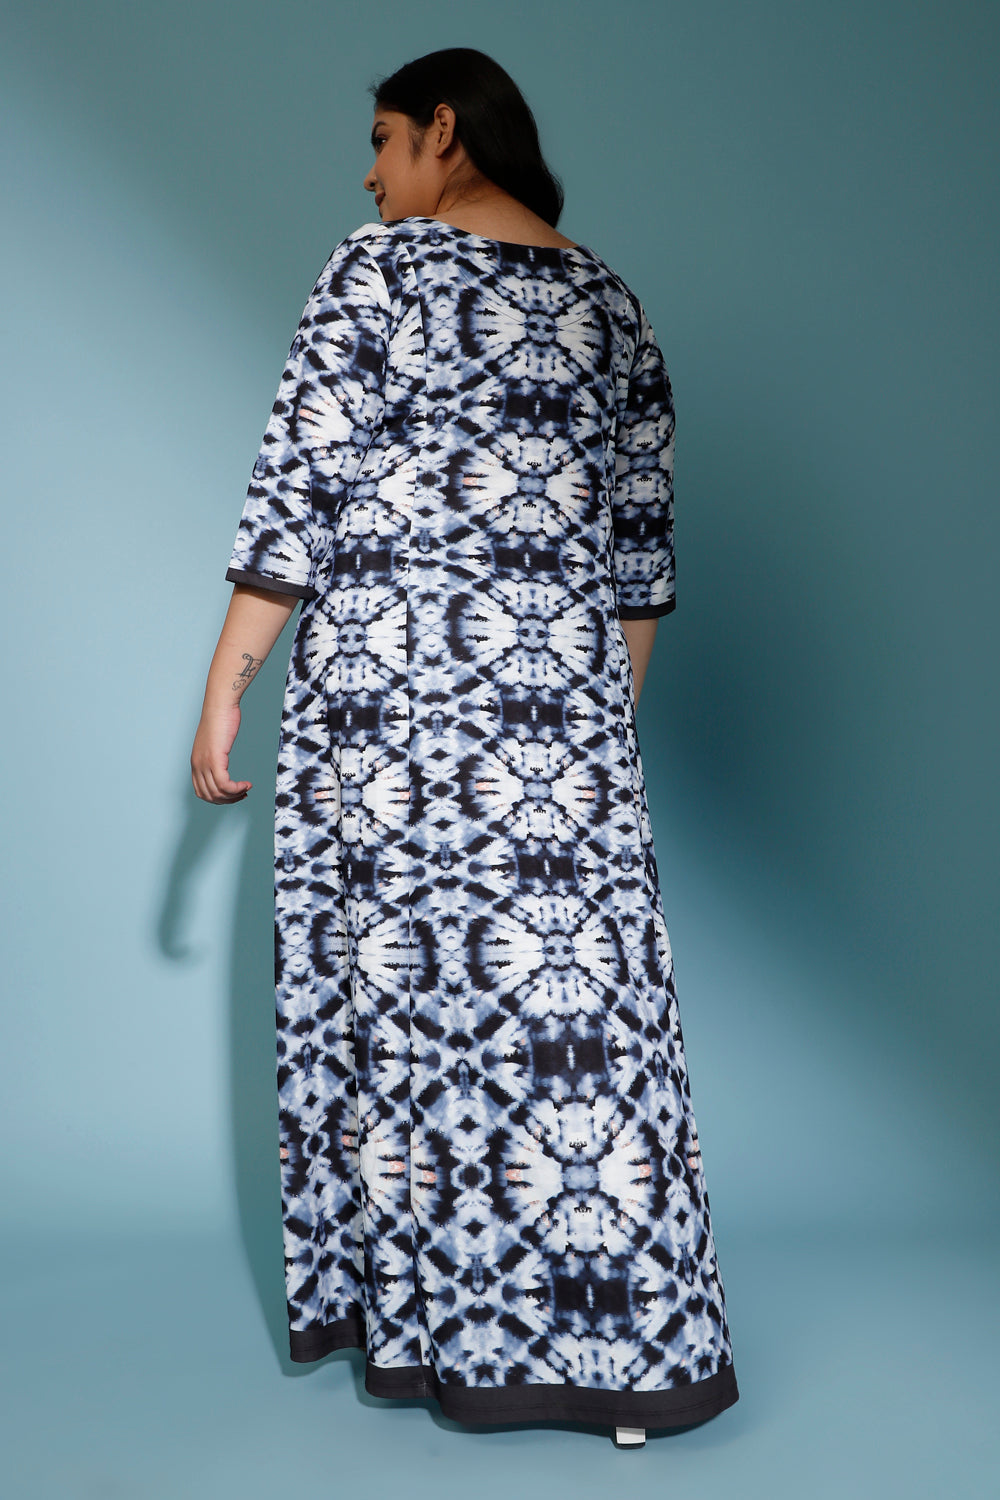 Shibori Inspired Printed Long Dress for Women